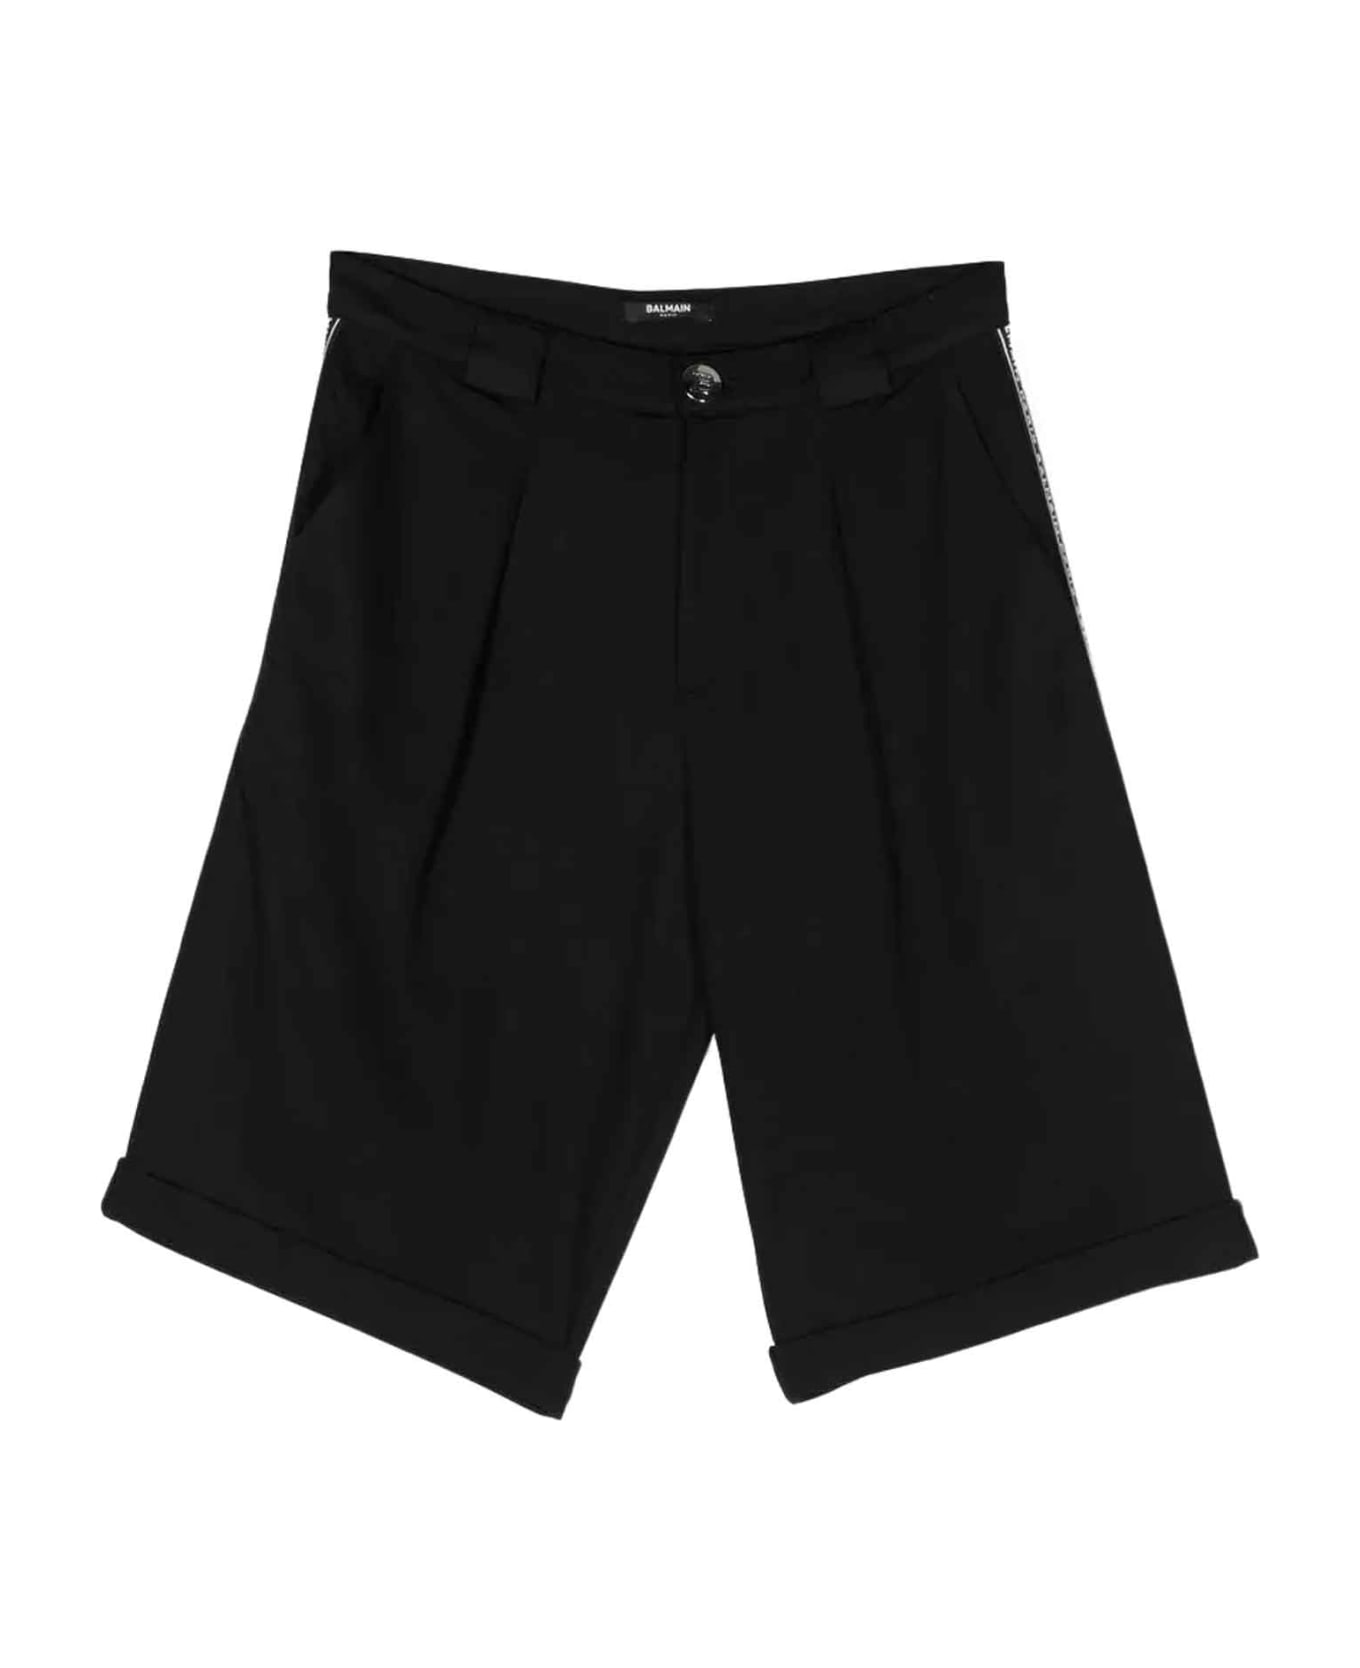 Balmain Black Bermuda Shorts Unisex - Nero ボトムス